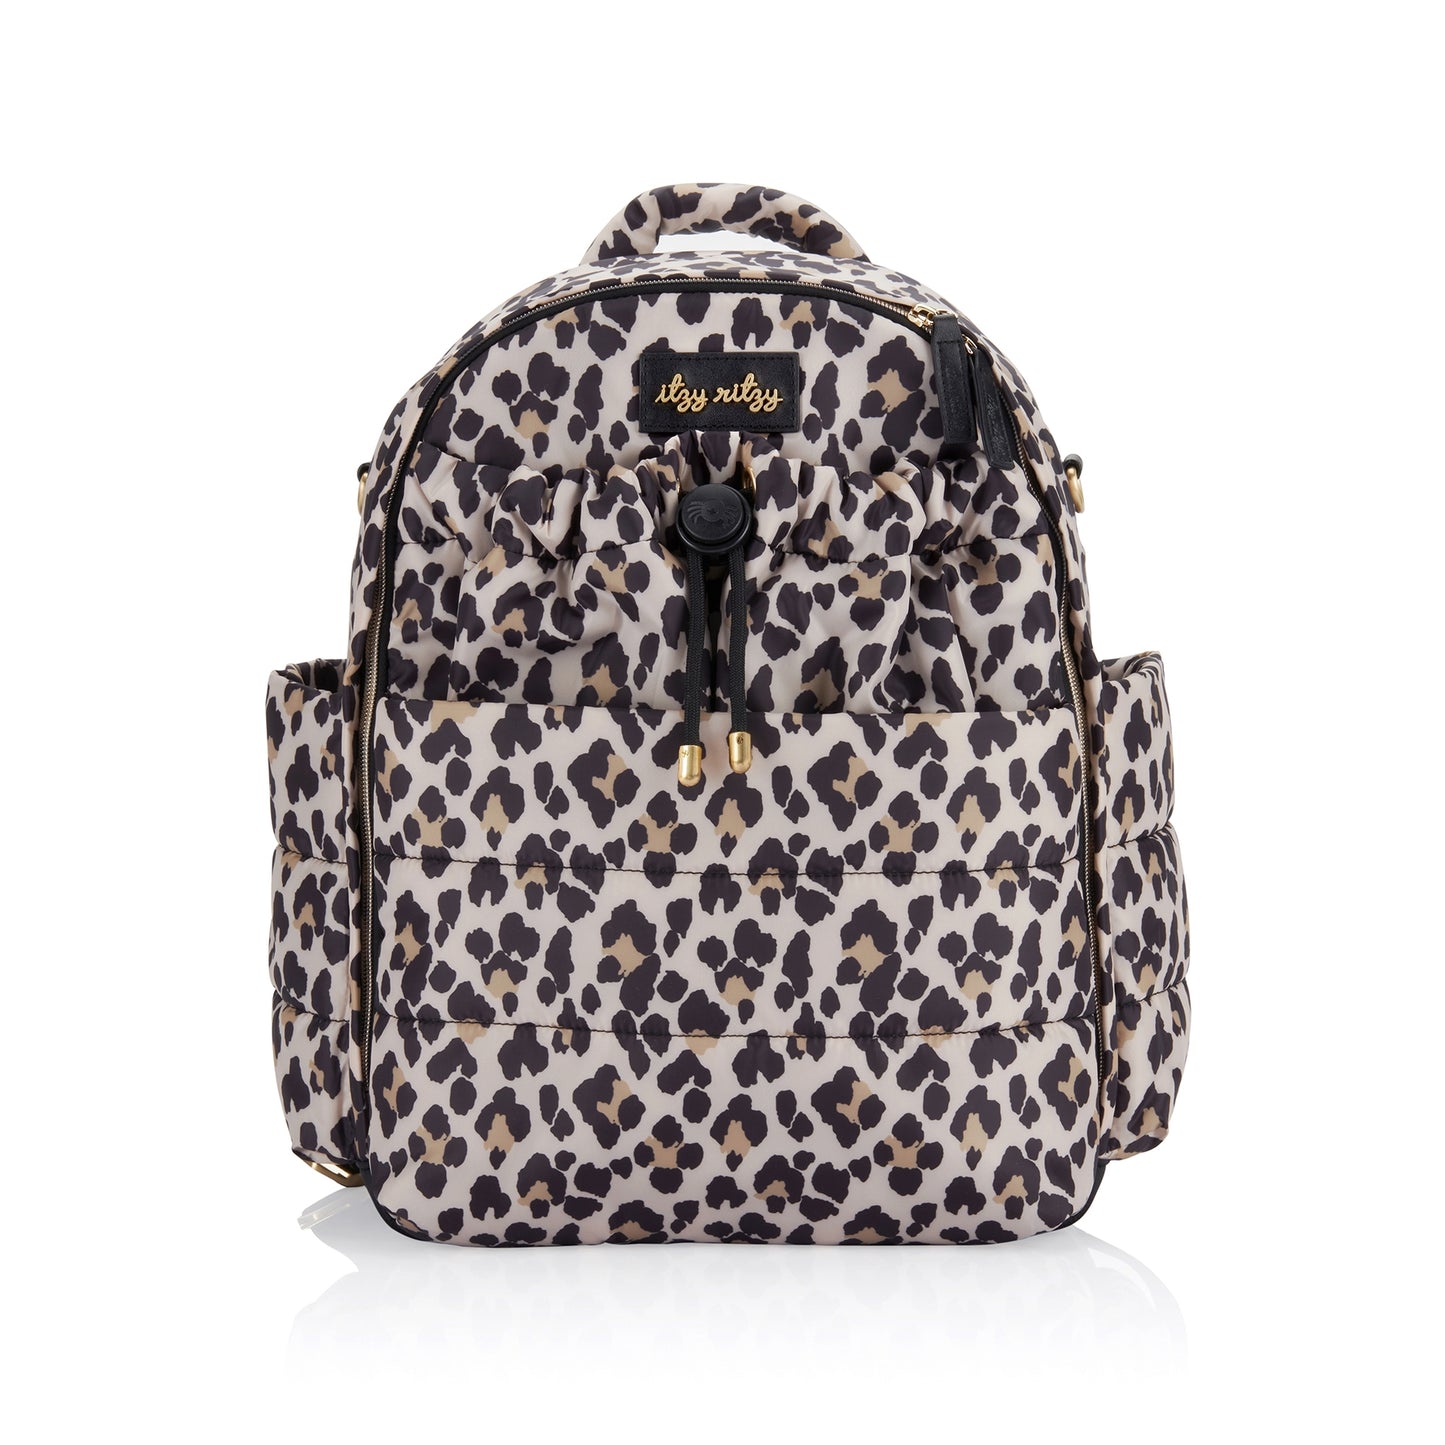 Dream Backpack Leopard Diaper Bag Itzy Ritzy